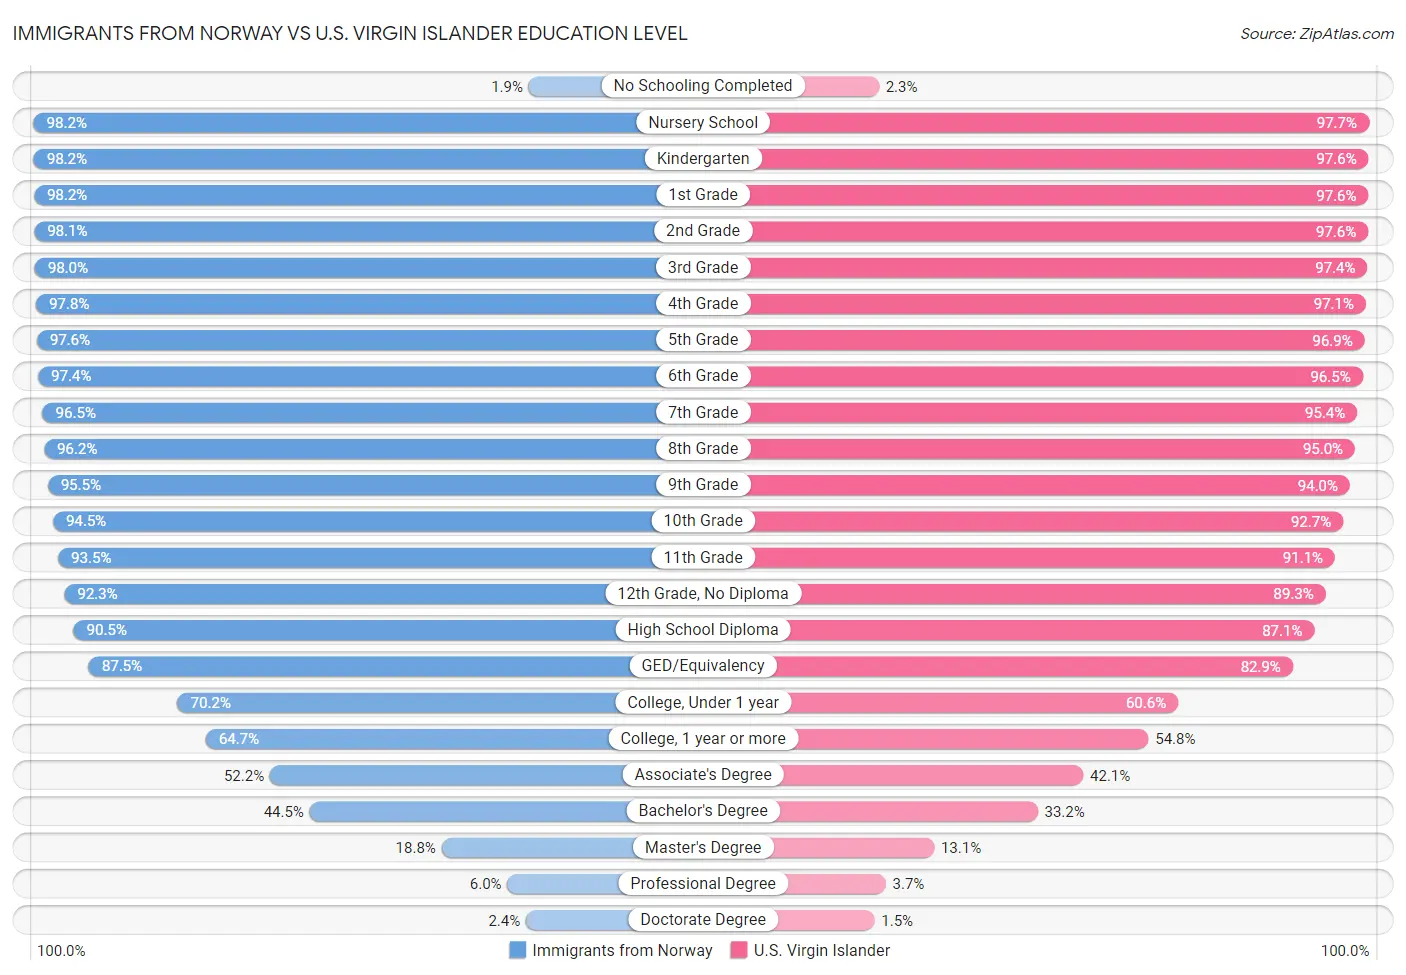 Immigrants from Norway vs U.S. Virgin Islander Education Level